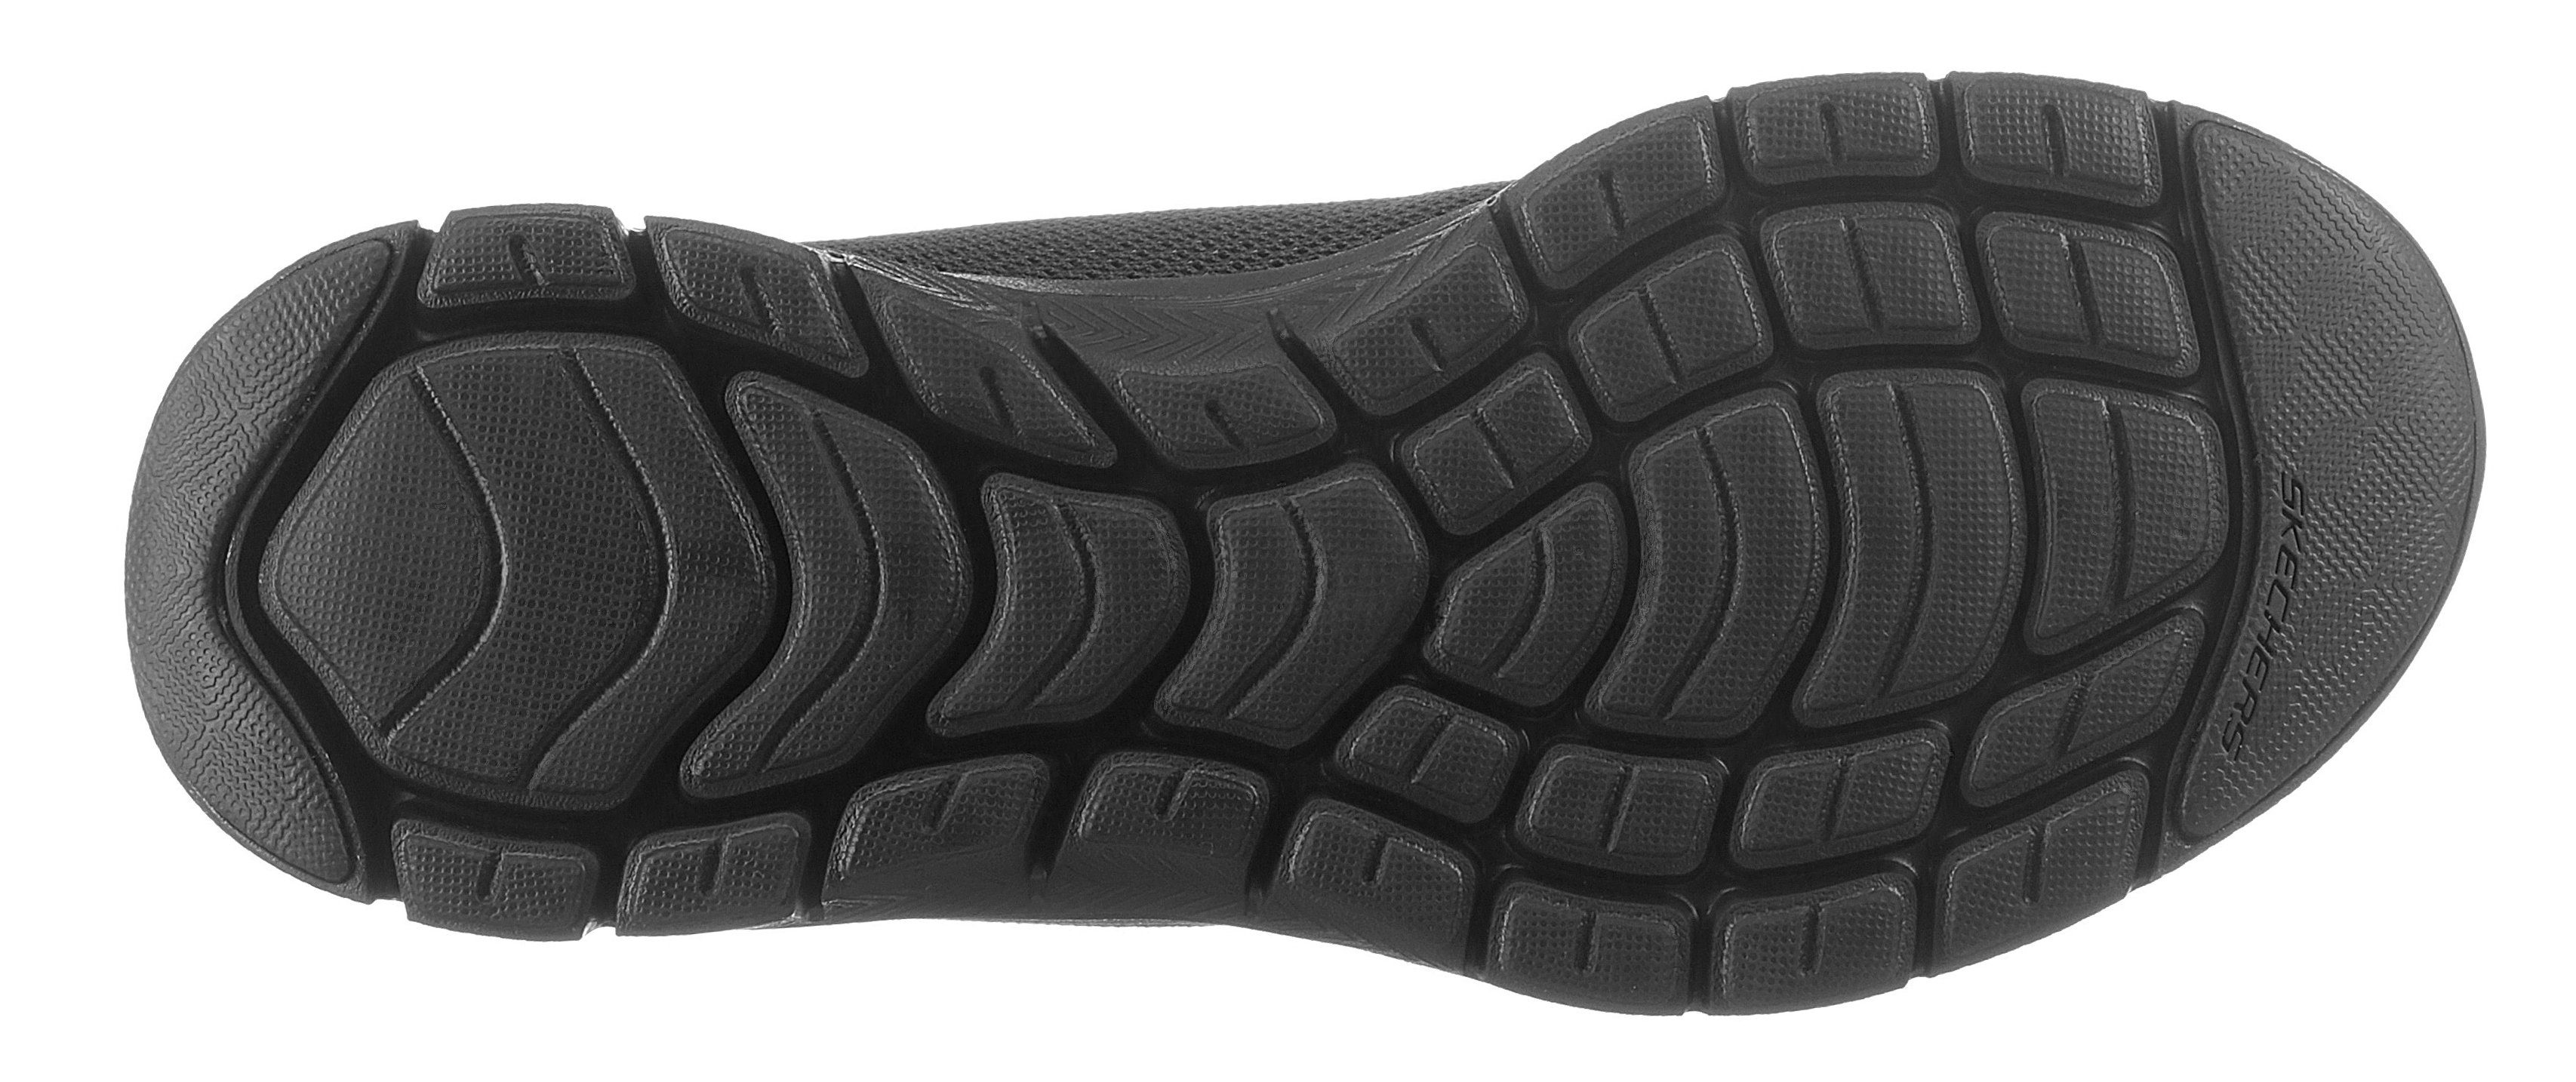 Sneaker schwarz FLEX Foam Memory BRILLINAT mit Ausstattung VIEW Skechers Air-Cooled 4.0 APPEAL